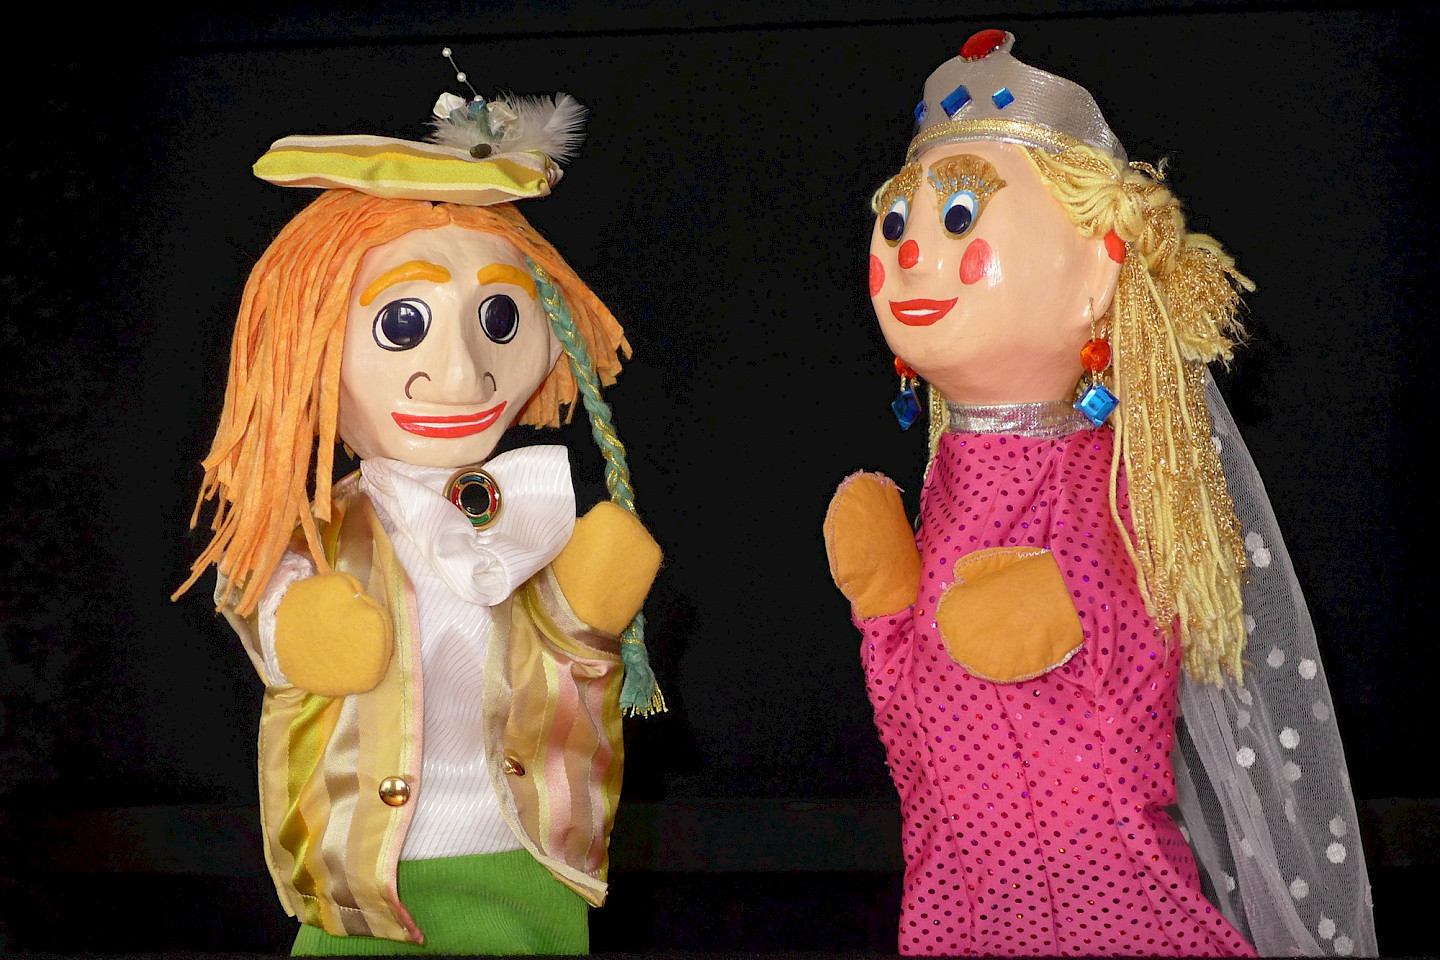 princess sock puppets